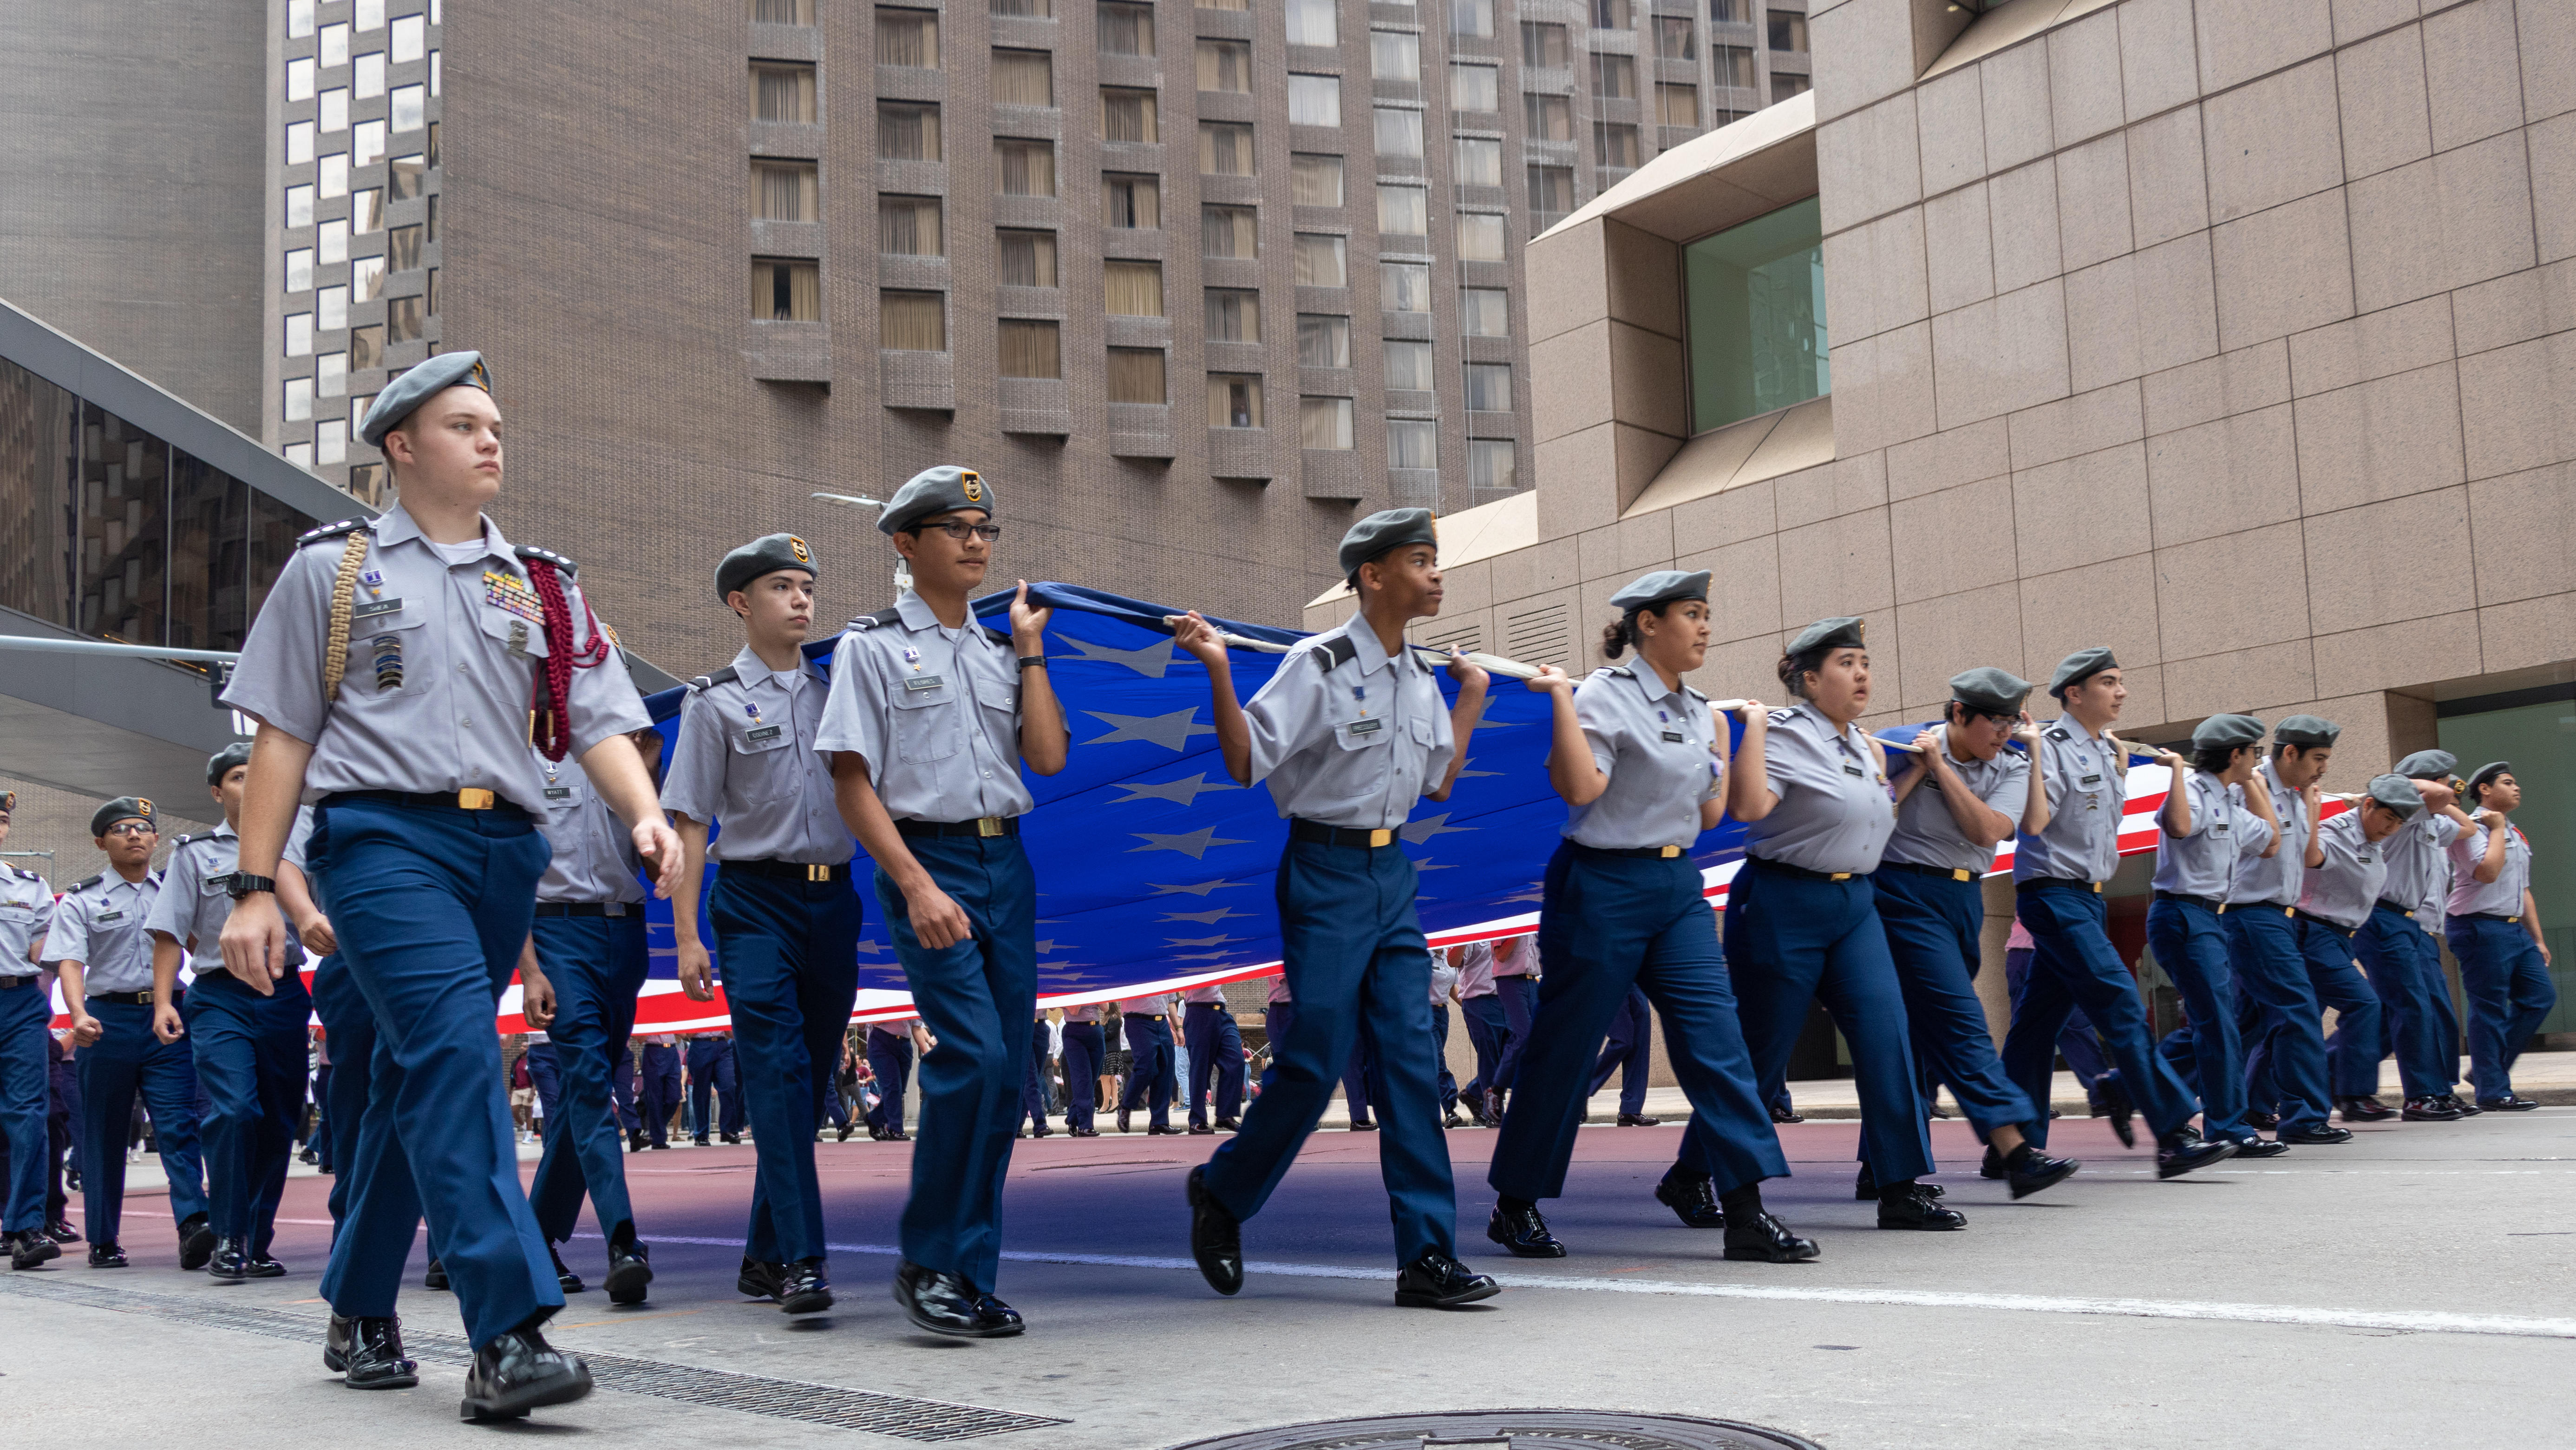 Houston Veterans Day parade, ceremony set for Friday morning in